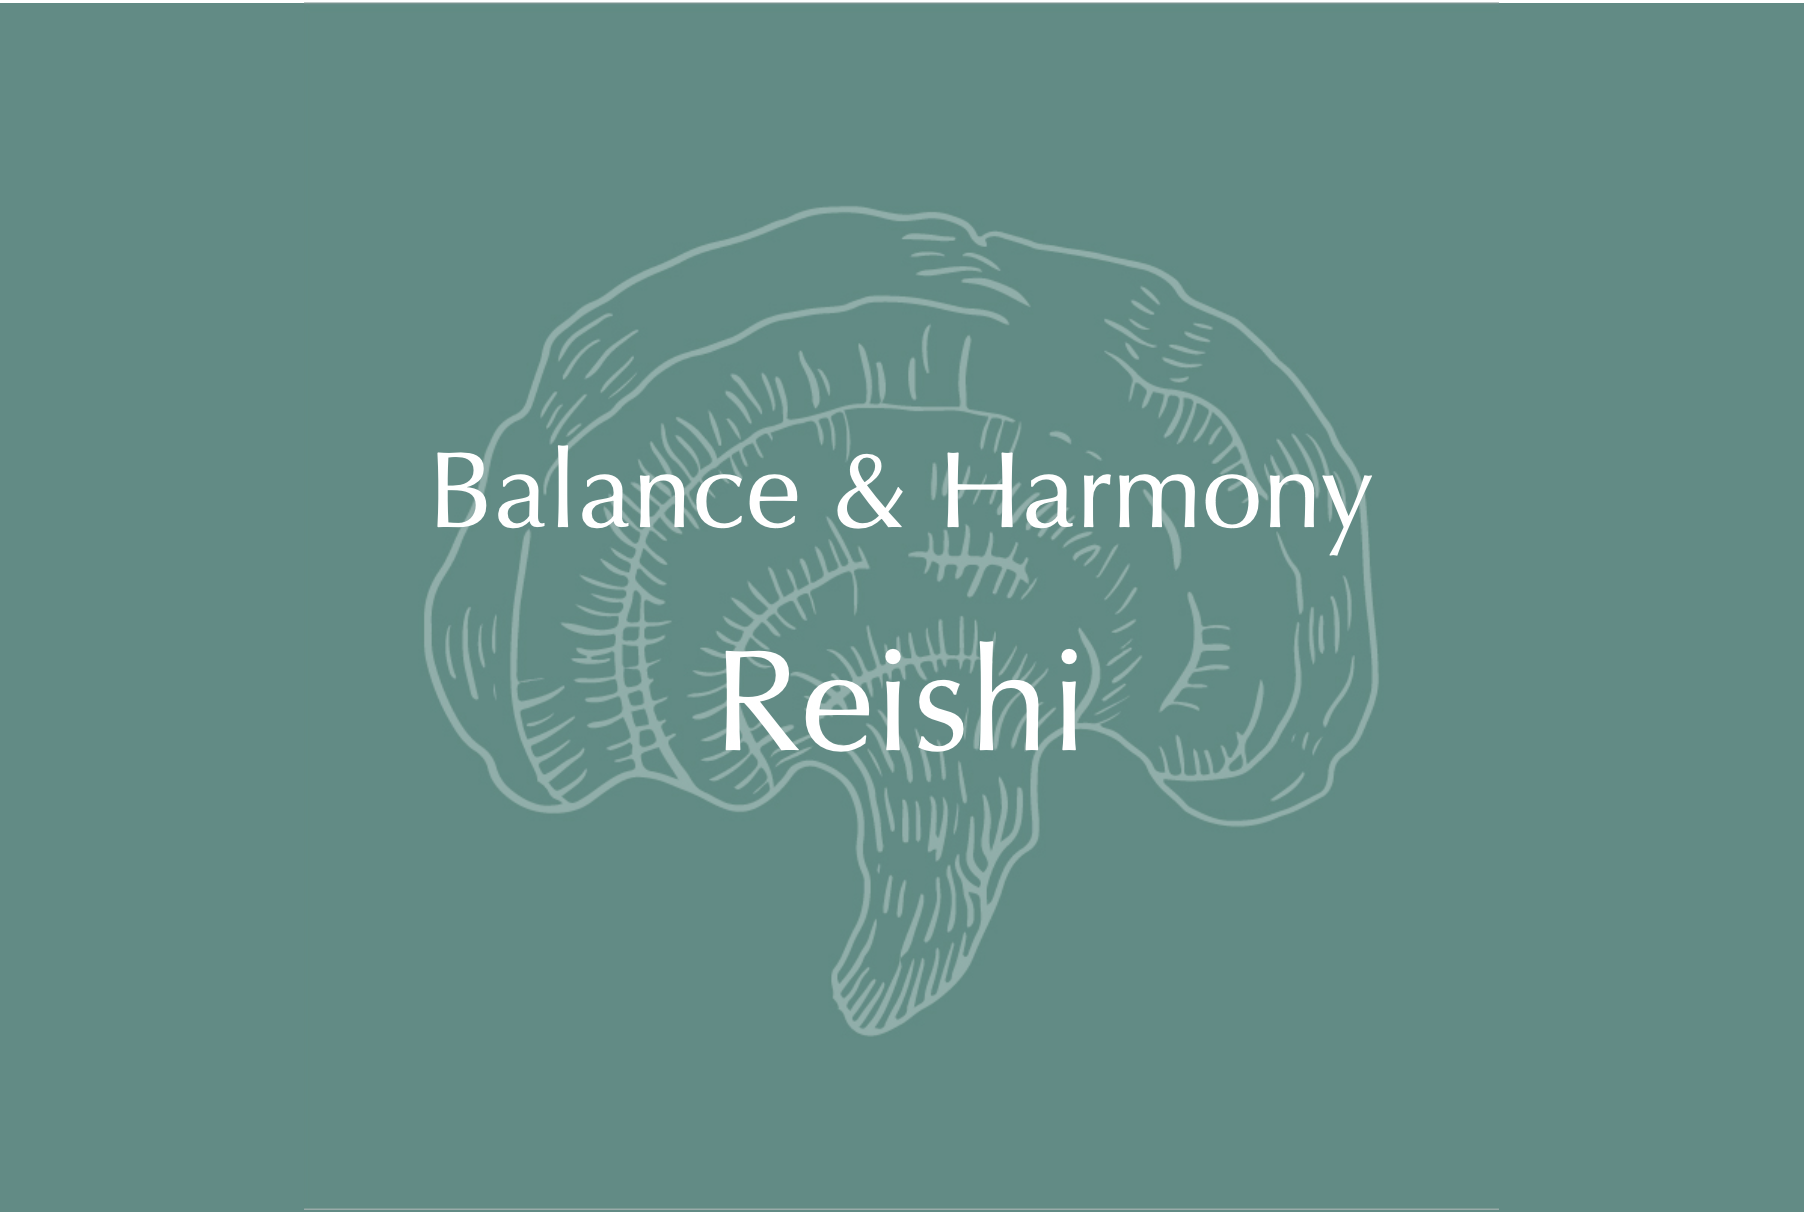 Reishi Balance and Harmony